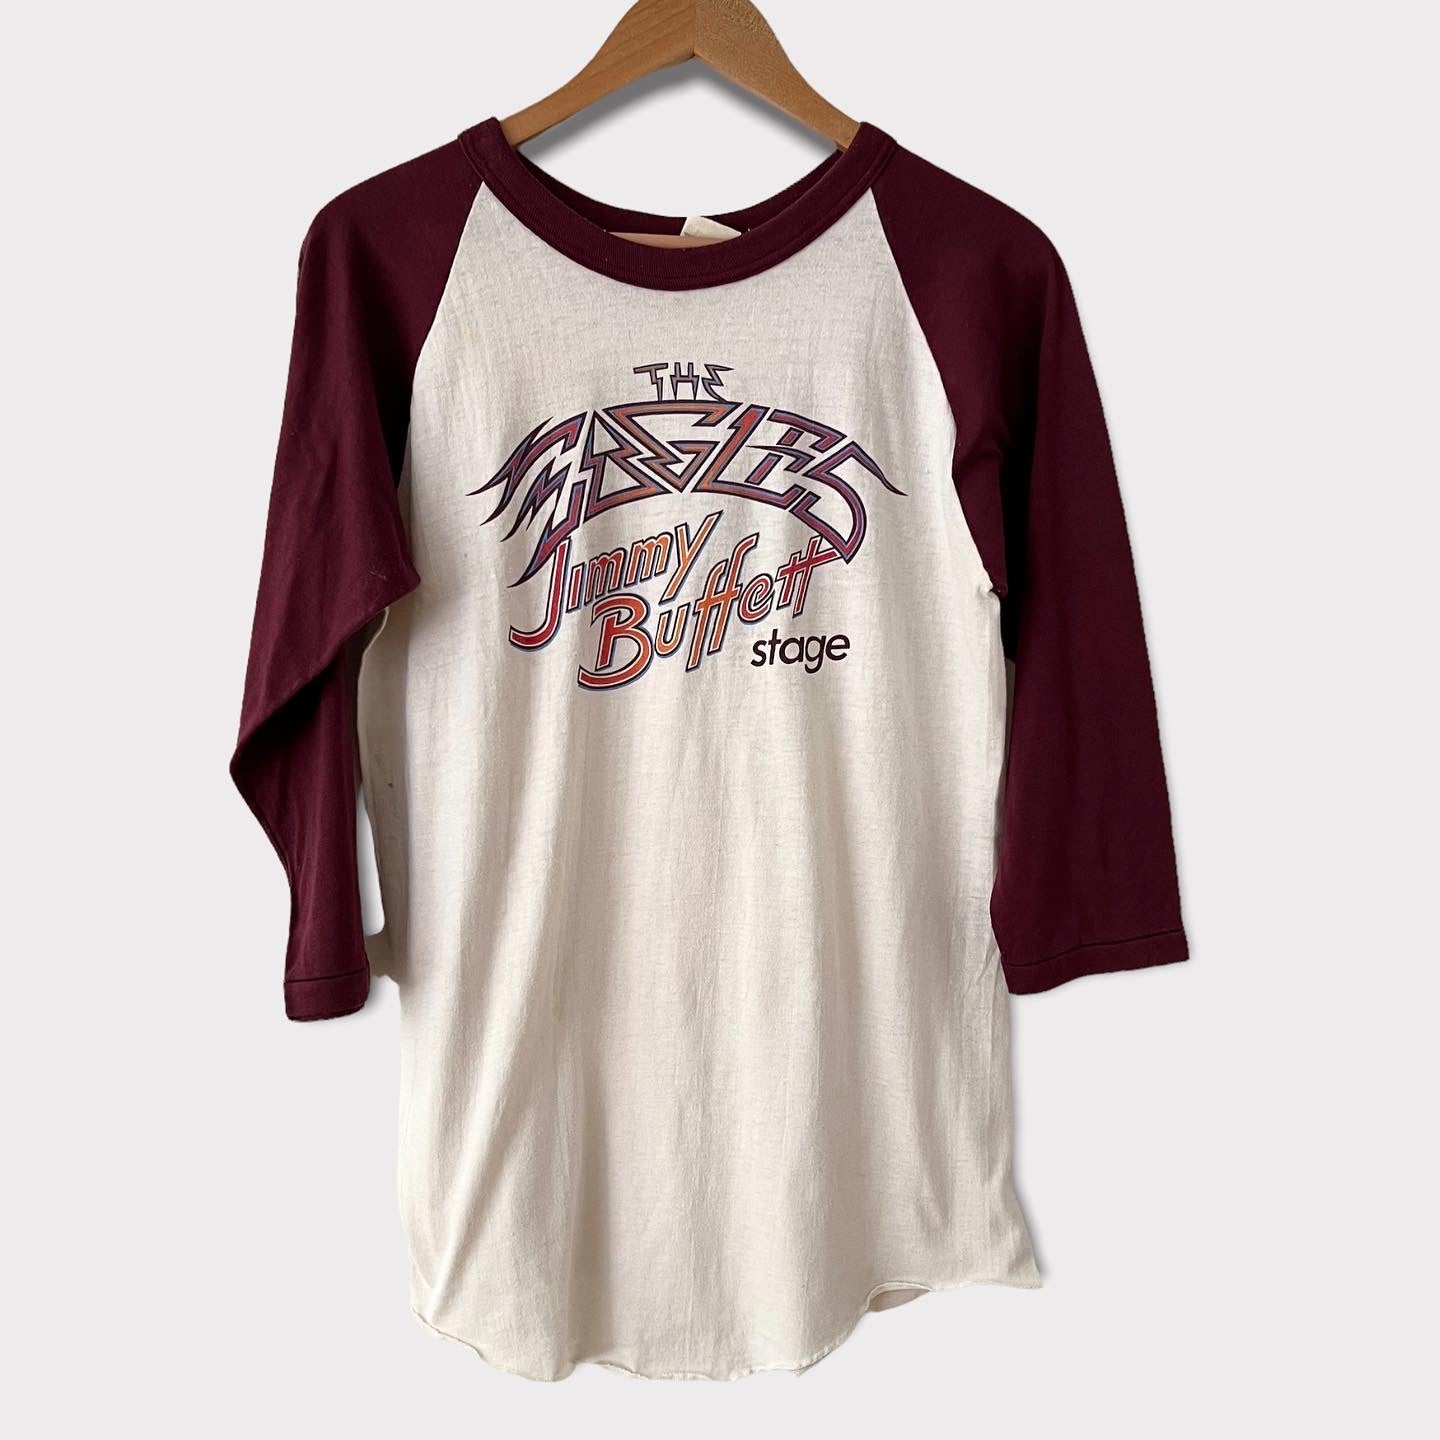 Vintage 1970s Eagles T Shirt Band Tee 